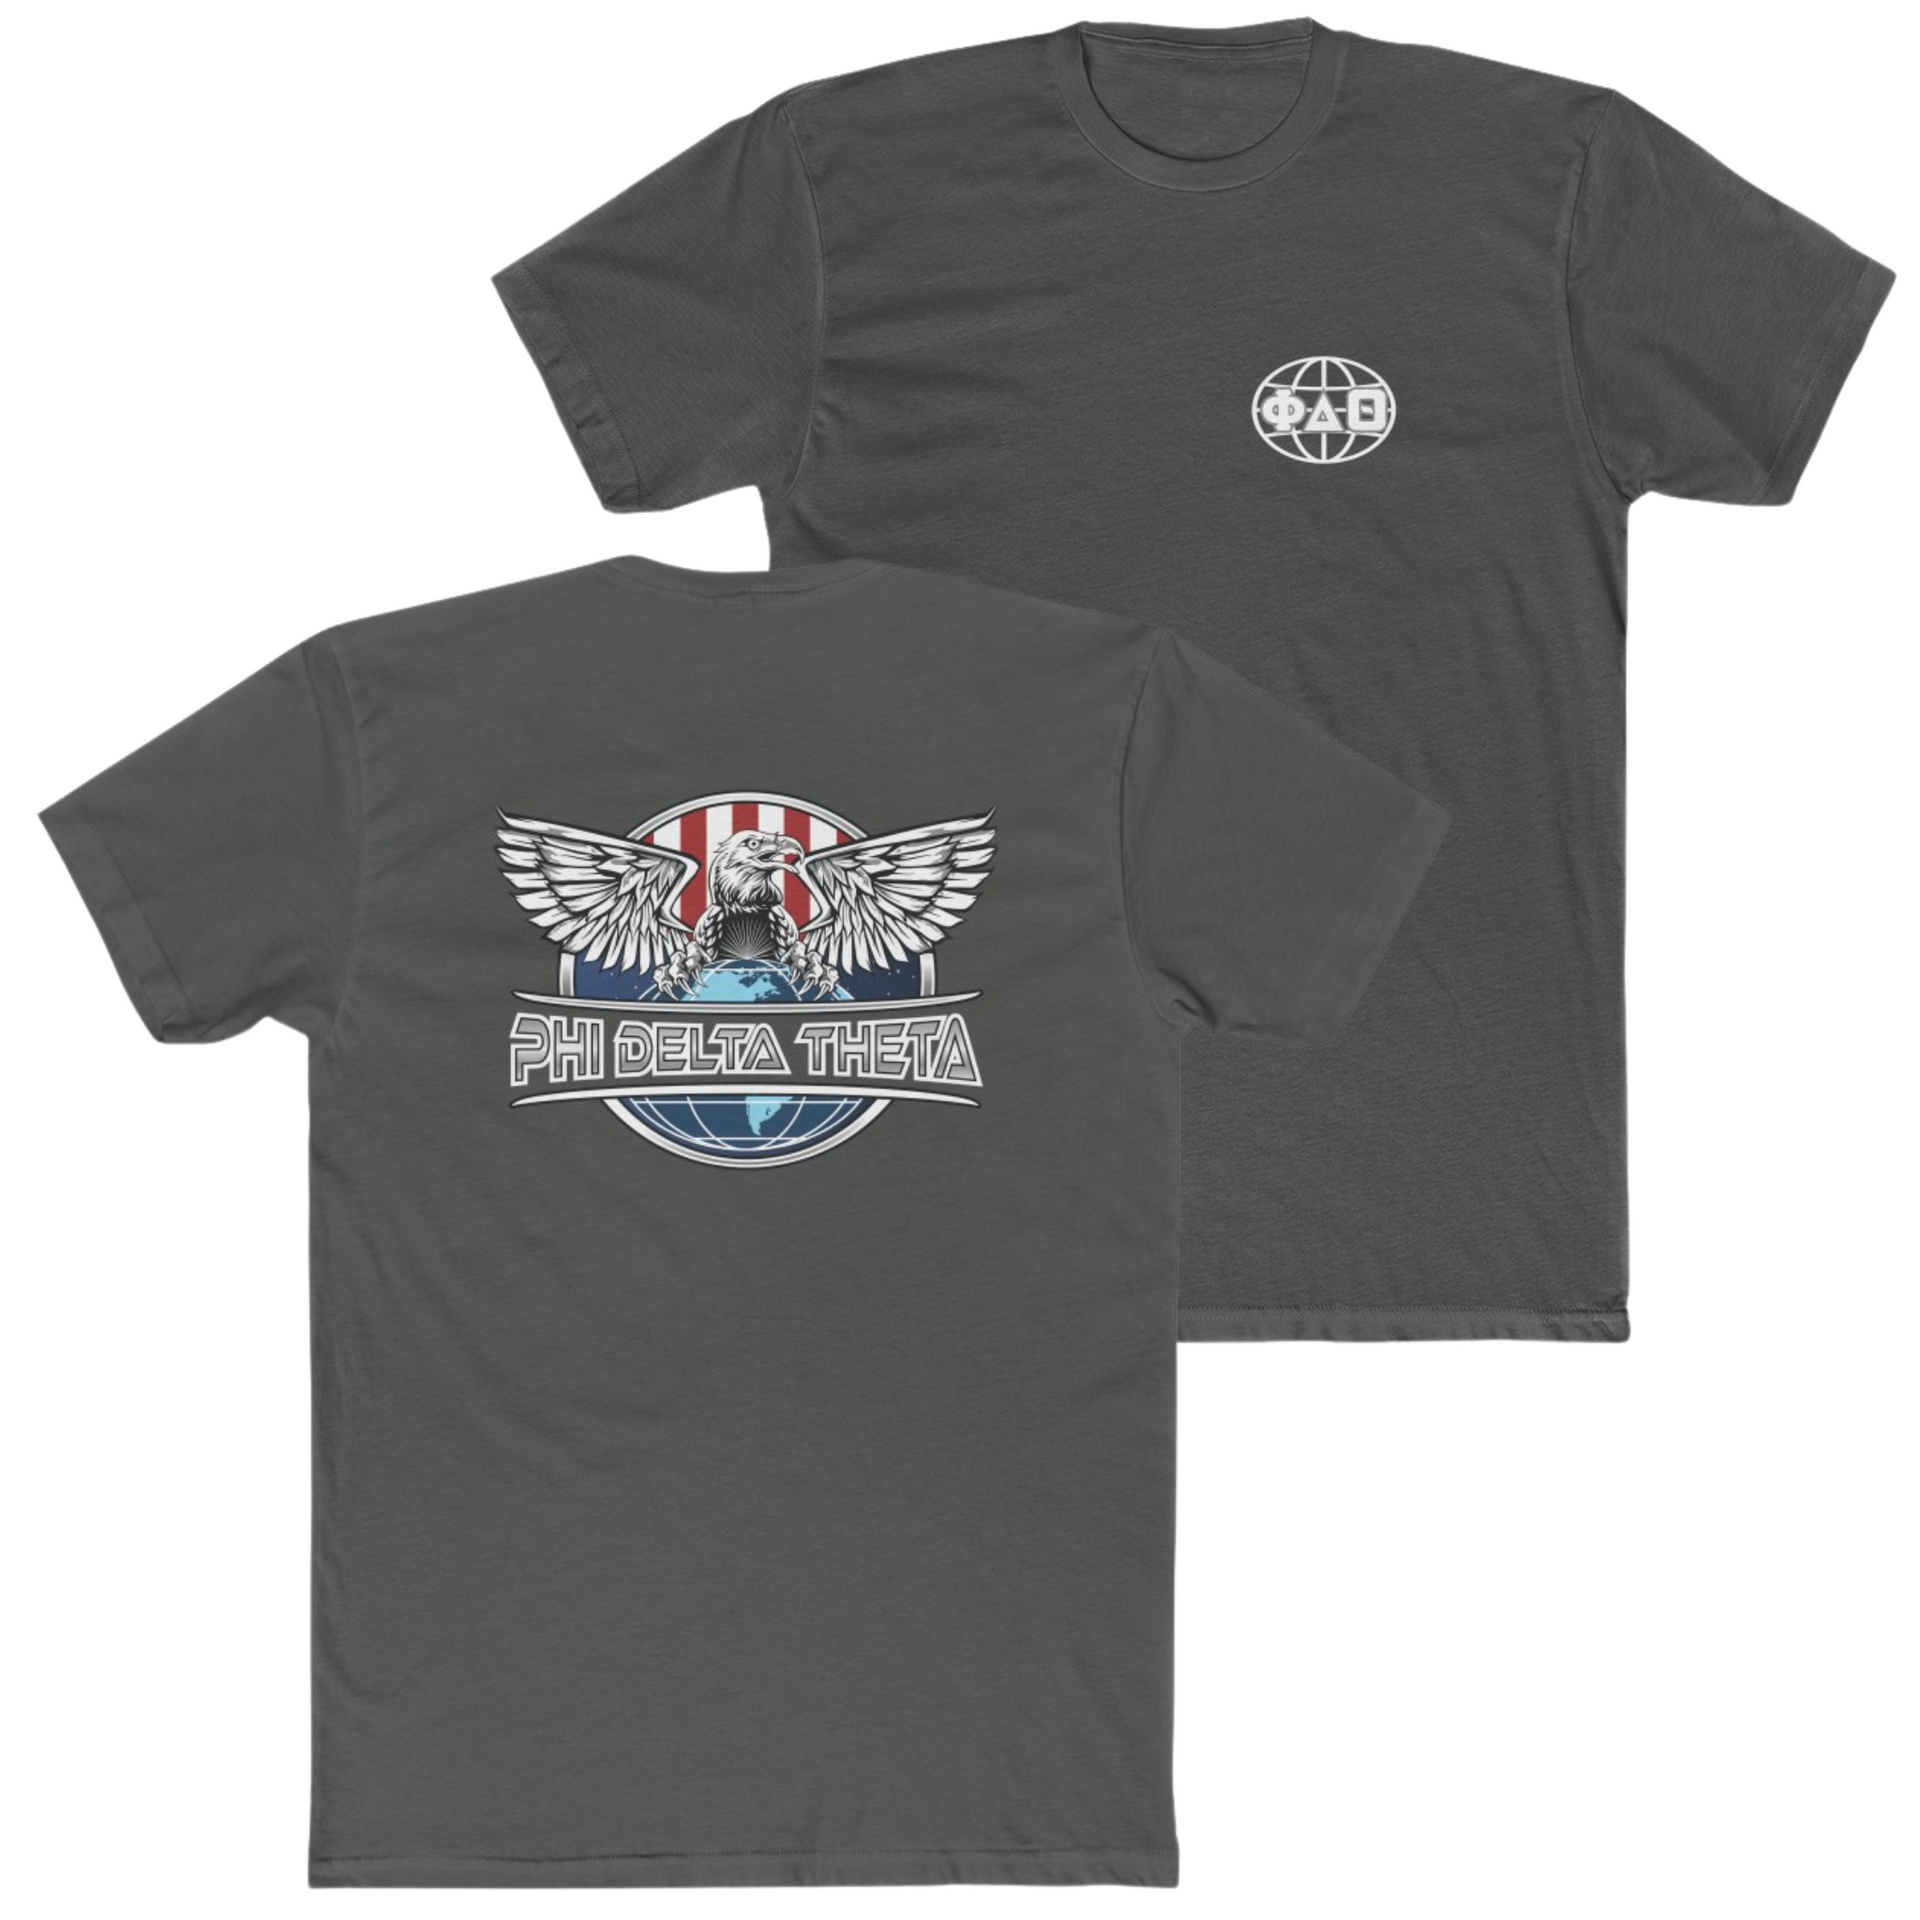 Grey Phi Delta Theta Graphic T-Shirt | The Fraternal Order | phi delta theta fraternity greek apparel